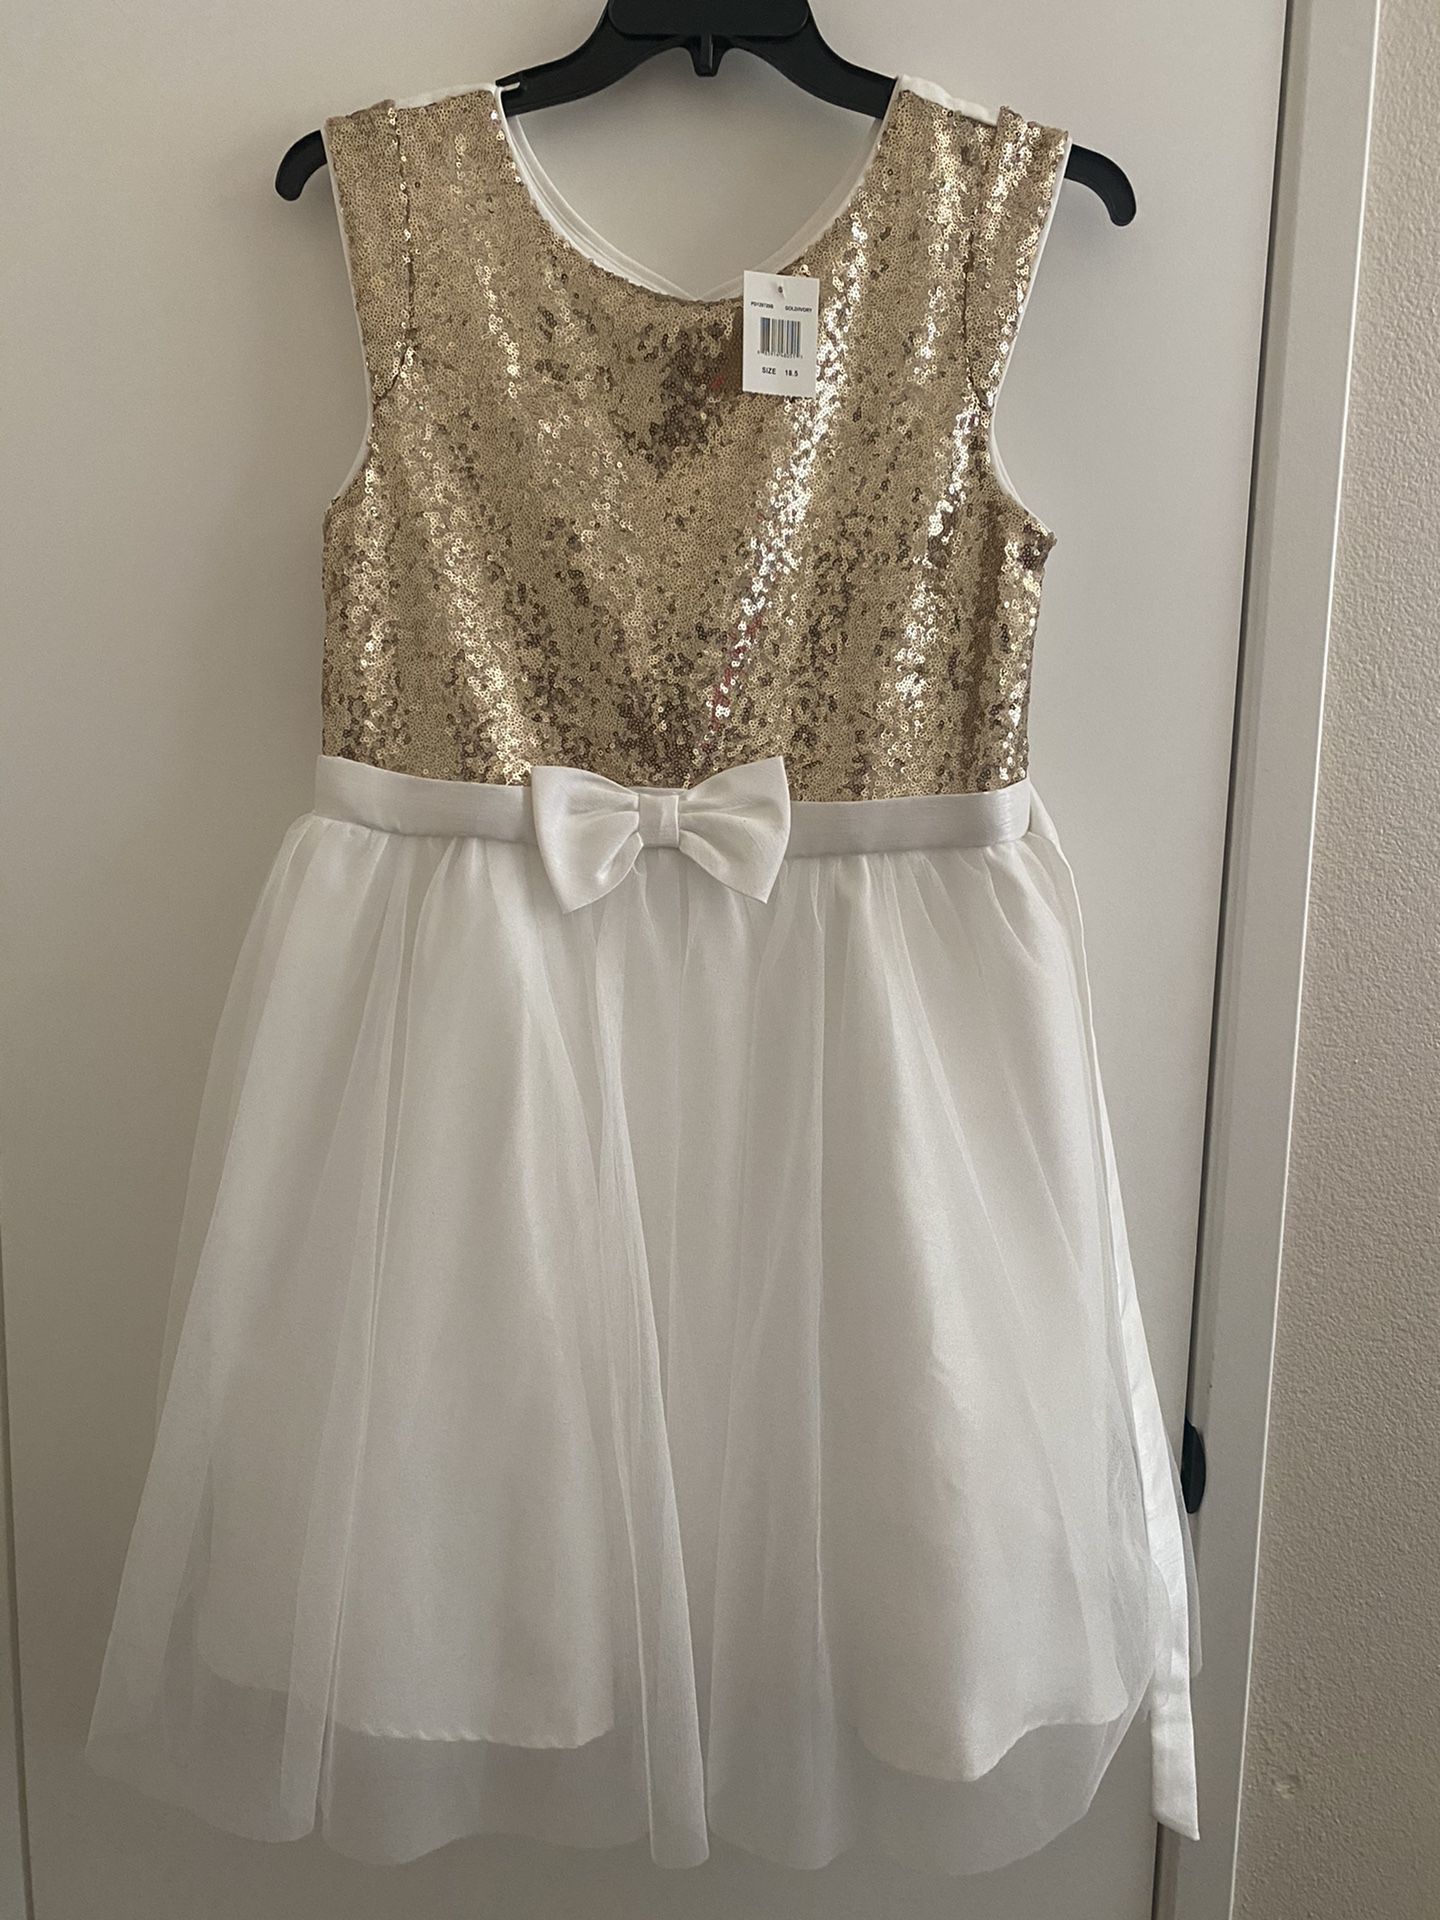 NEW DRESS!! Size 18.5 (kids)